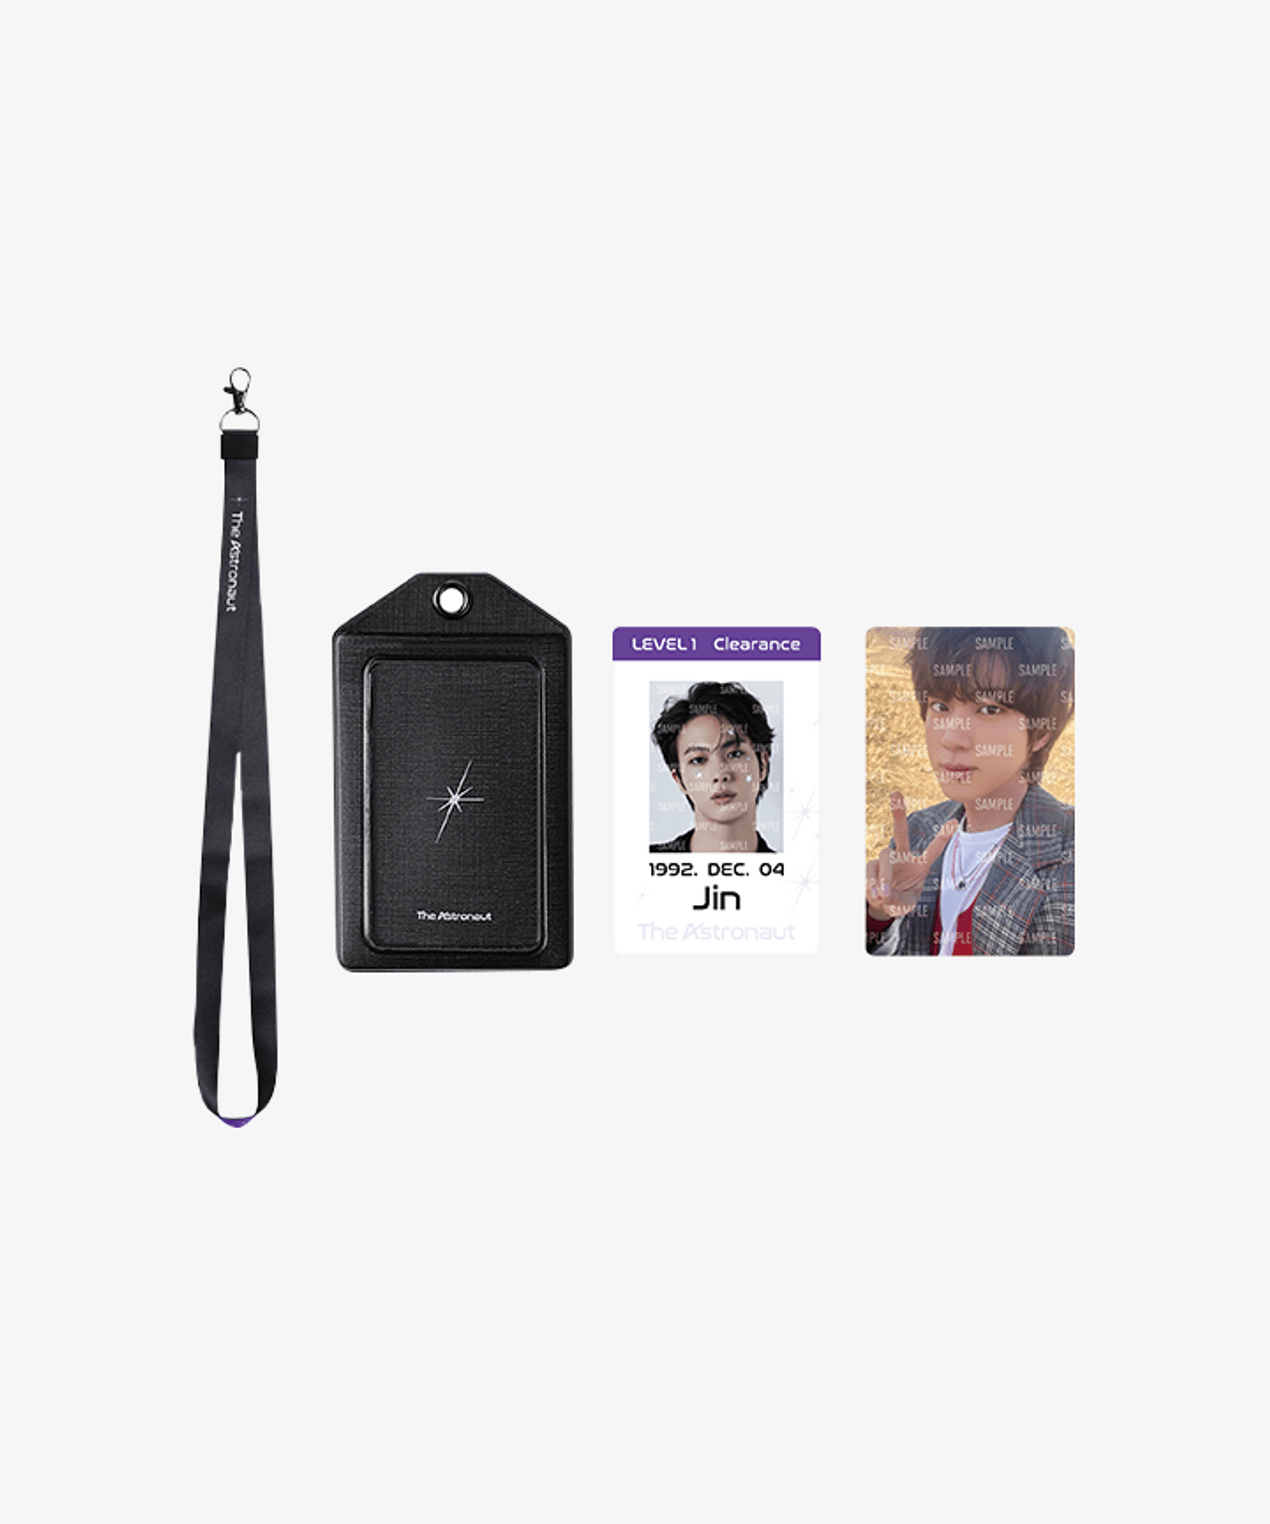 JIN [The Astronaut] ID Card Holder Set